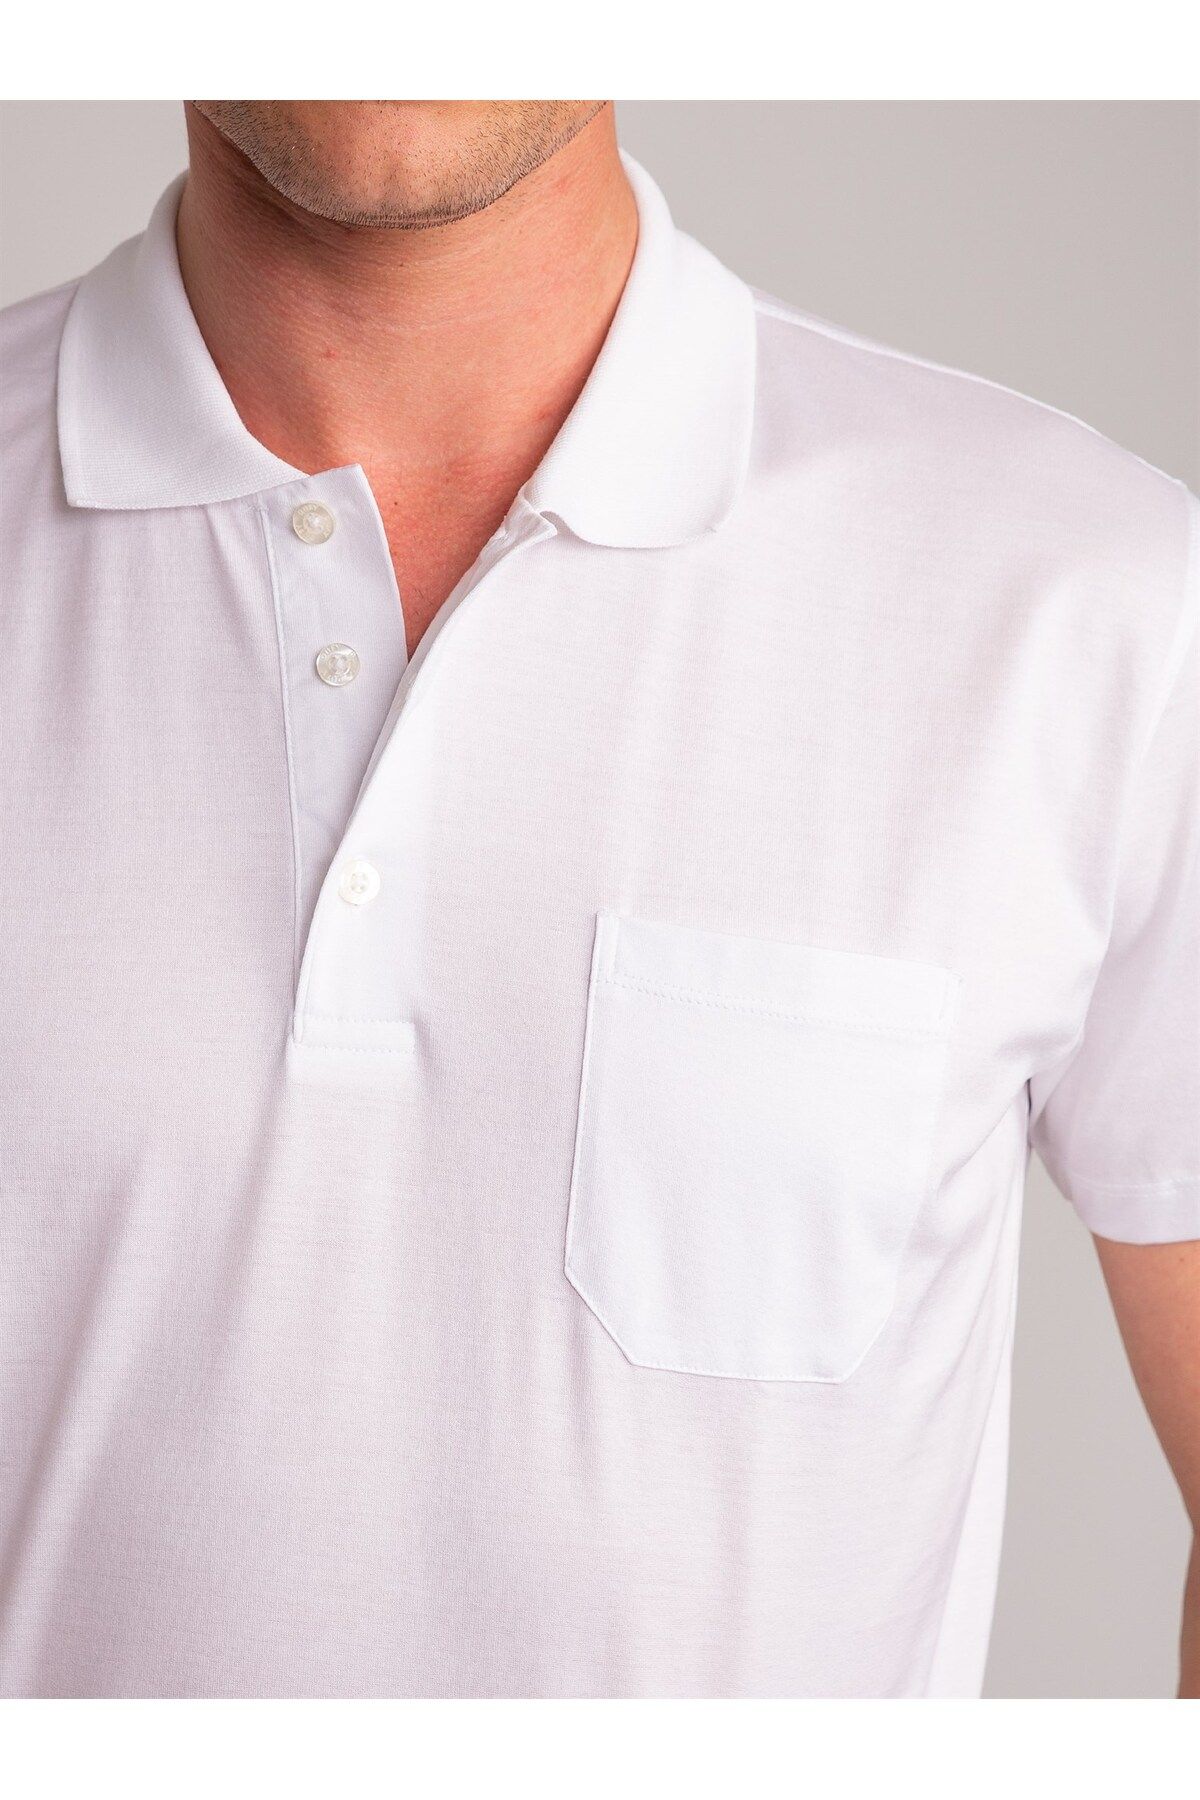 Dufy تی شرت یقه چوگان با تناسب معمولی مردانه سفید